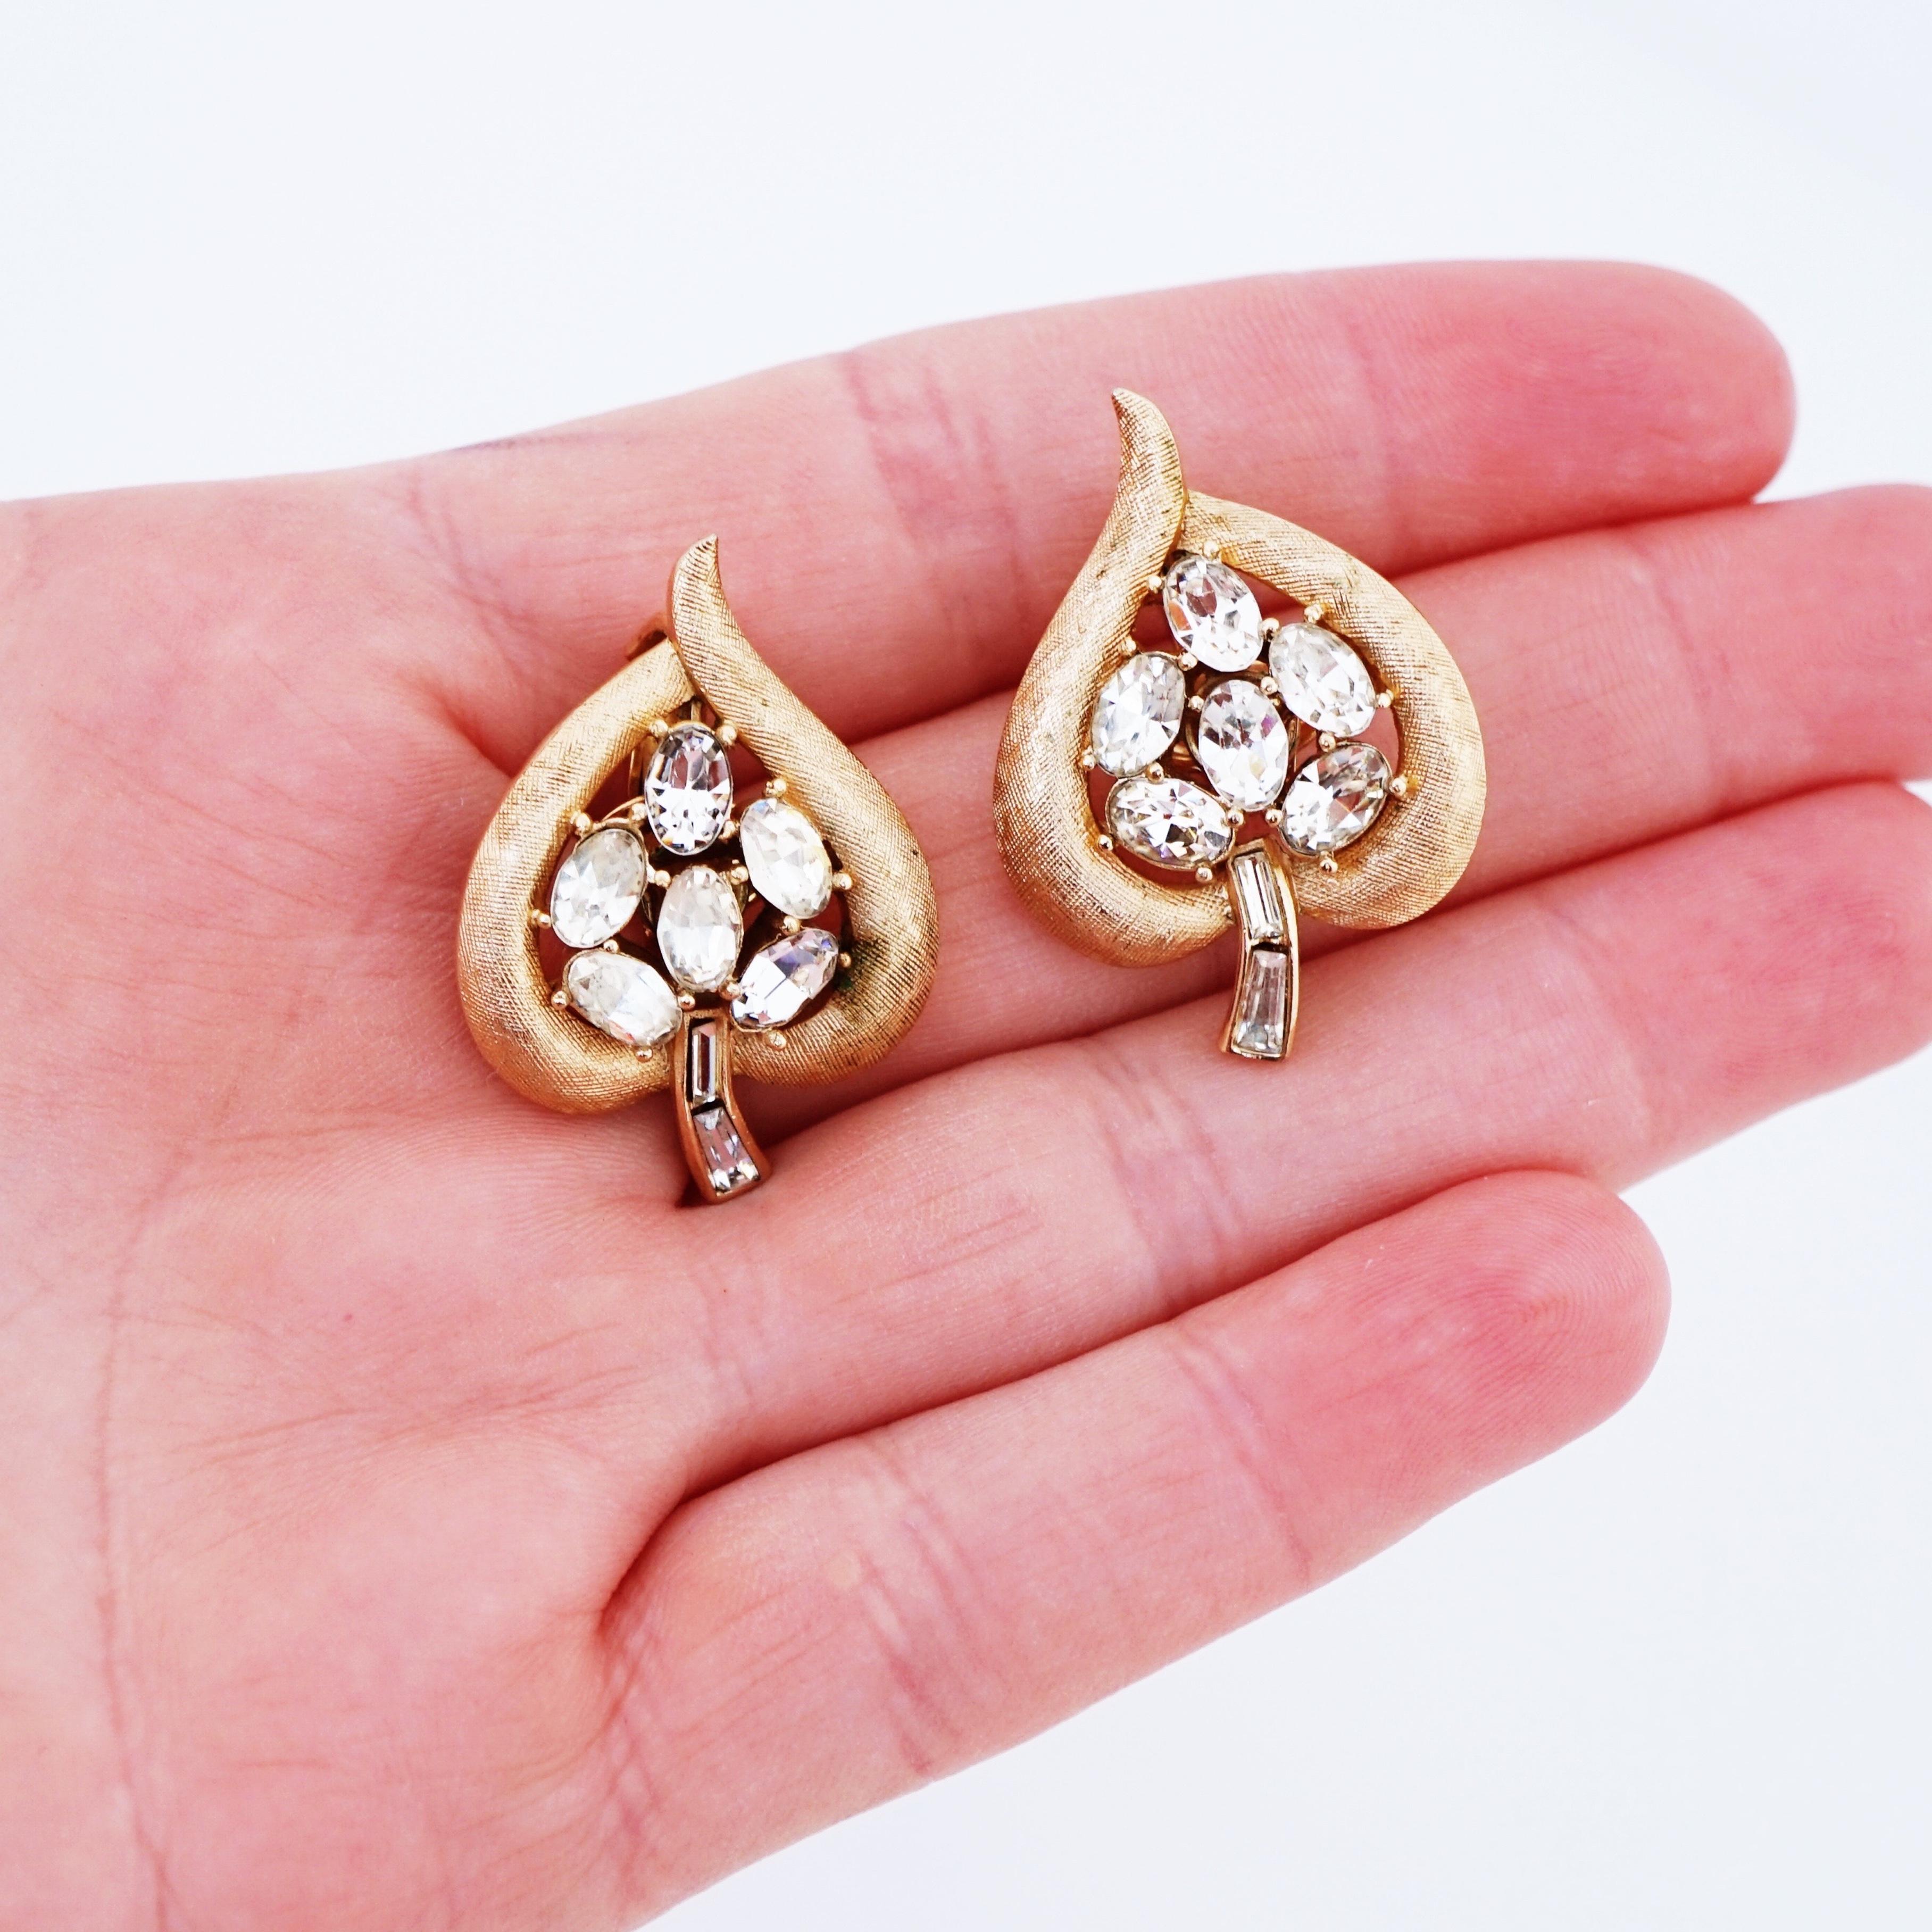 Modern Textured Gold Crystal Encrusted Heart Leaf Earrings By Crown Trifari, 1950s